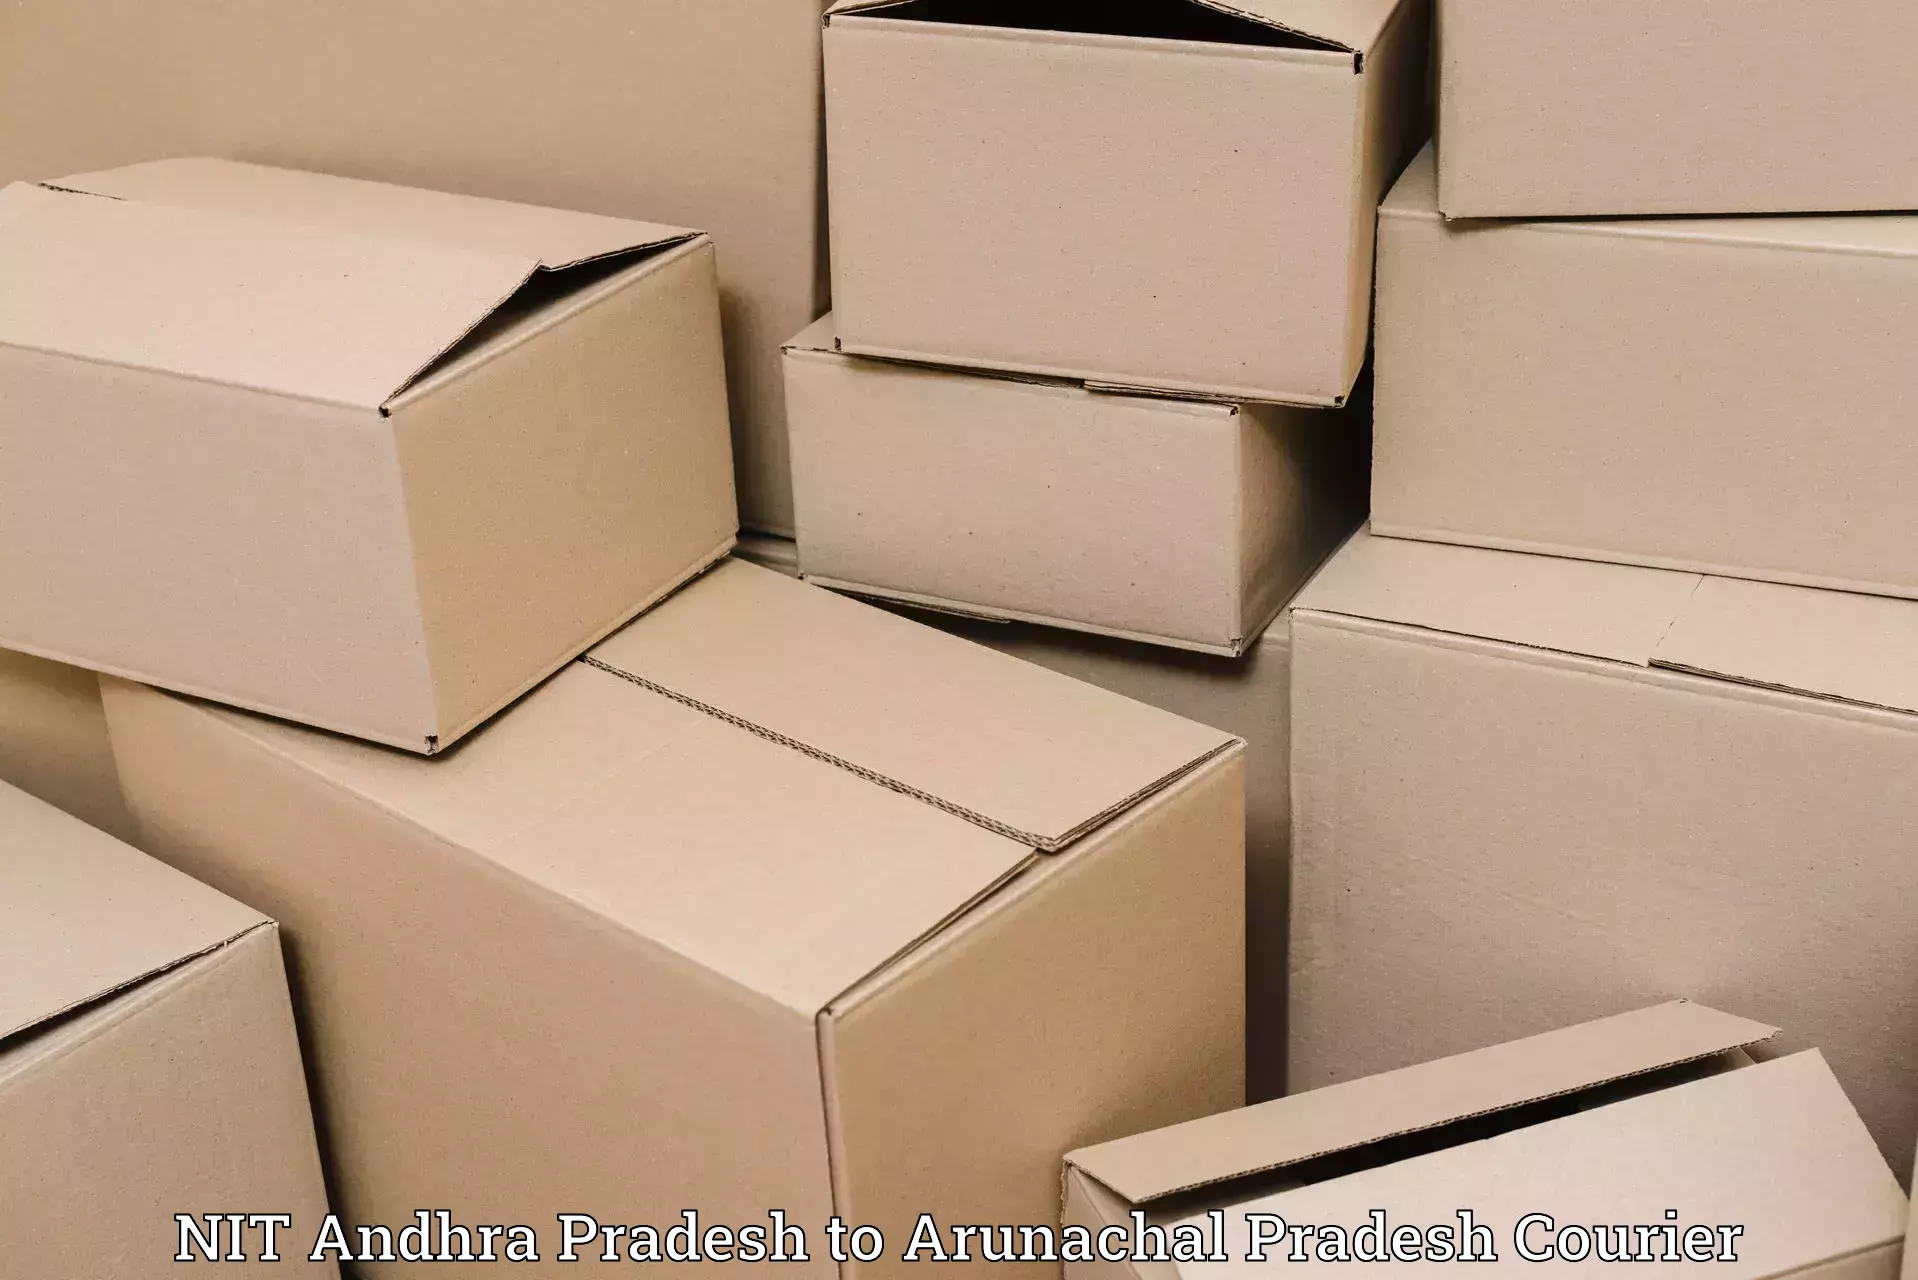 Business courier solutions NIT Andhra Pradesh to Arunachal Pradesh